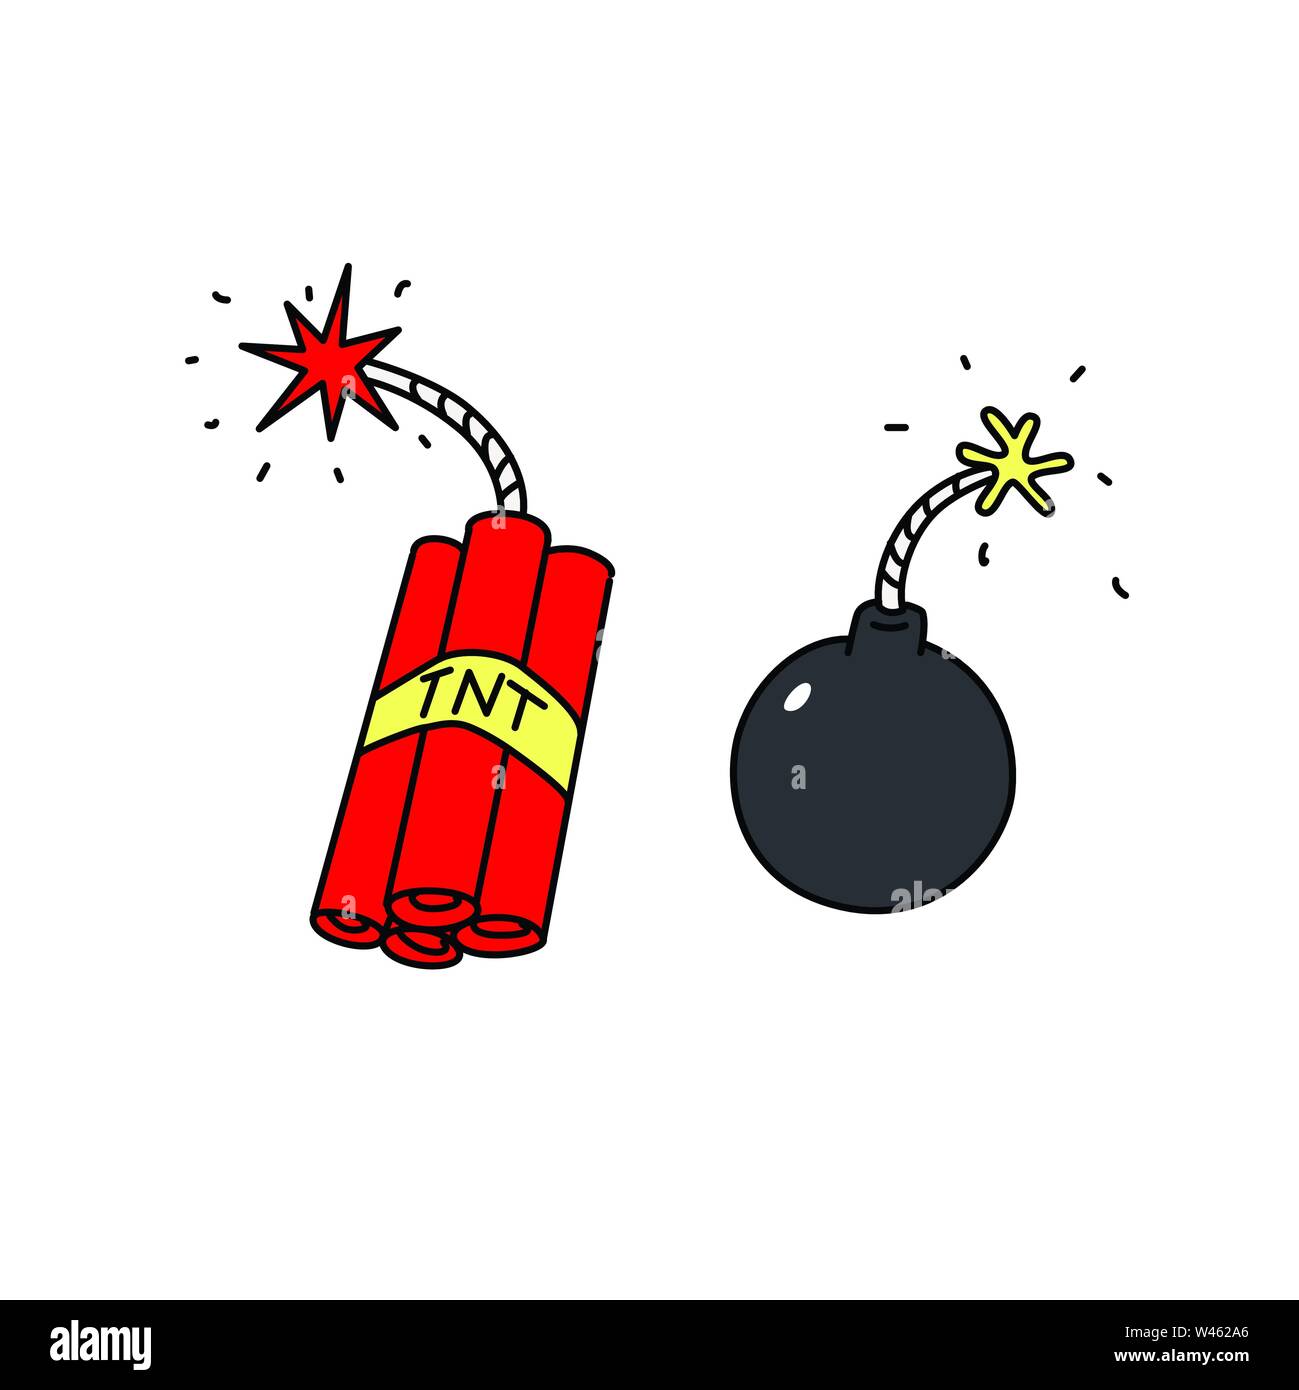 Sprengstoffe Symbole. Vektor. Waffen der Terroristen. Cartoon Stil. Bomben und Dynamit. Stock Vektor